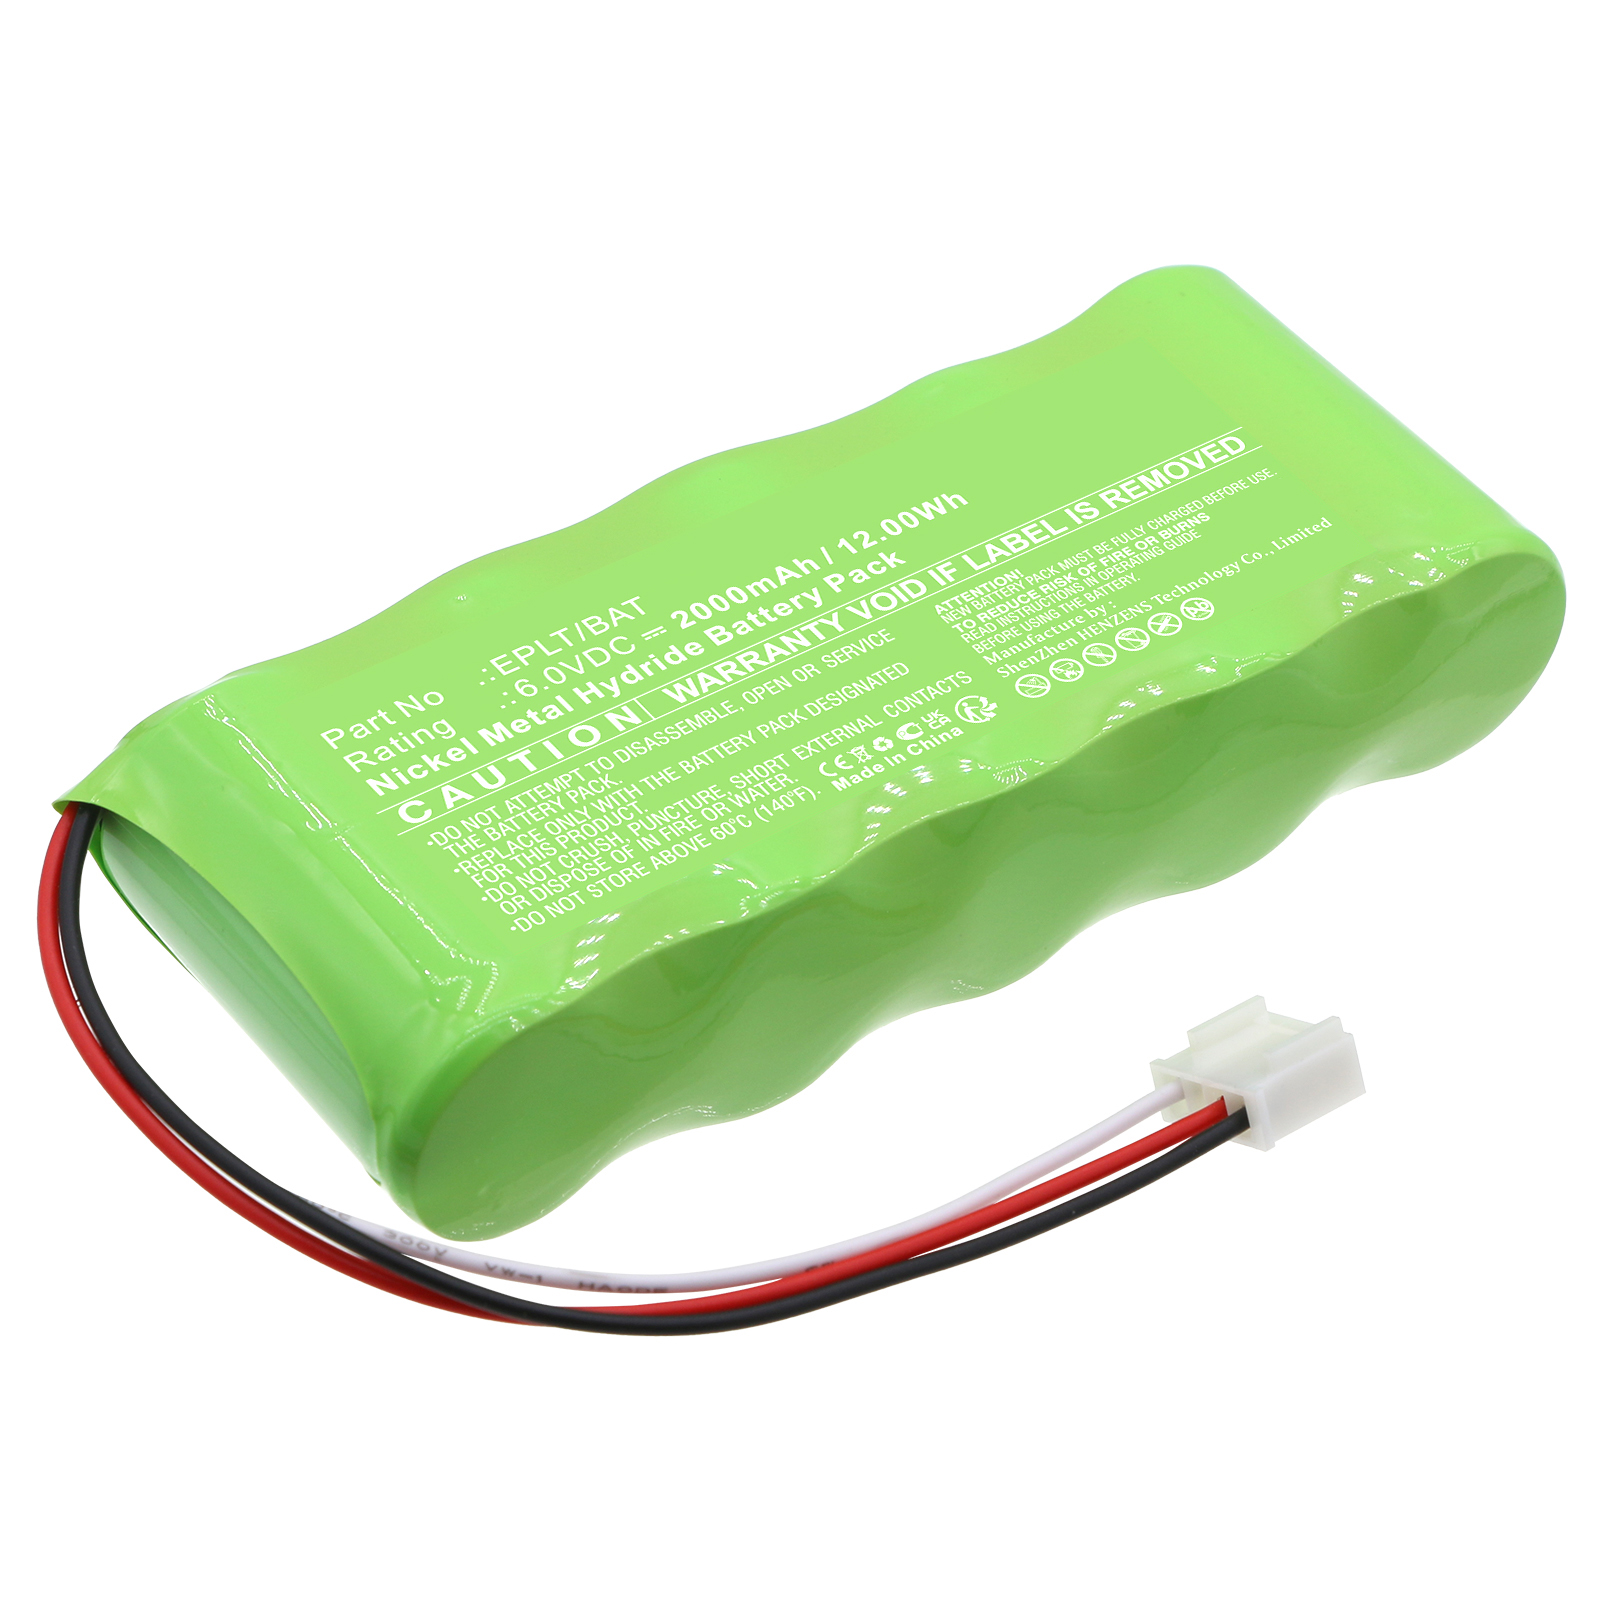 Synergy Digital Medical Battery, Compatible with Olympus EPLT/BAT Medical Battery (Ni-MH, 6V, 2000mAh)